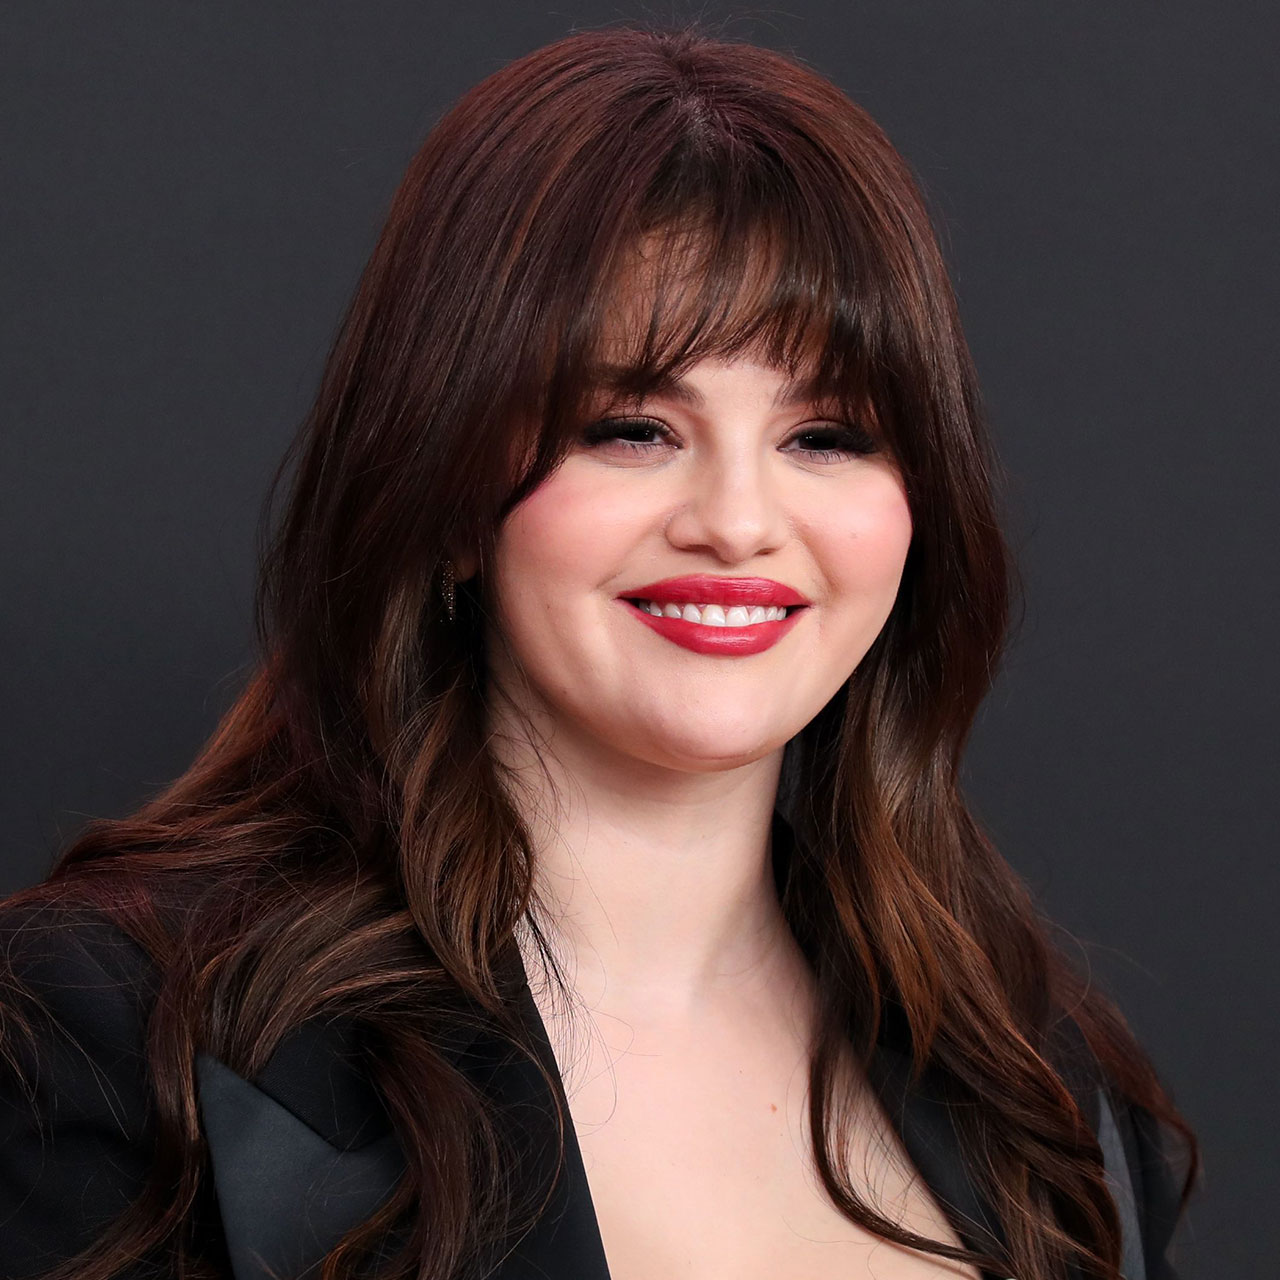 Selena Gomez Wore a White Lace Corset Top to Rare Beauty Event